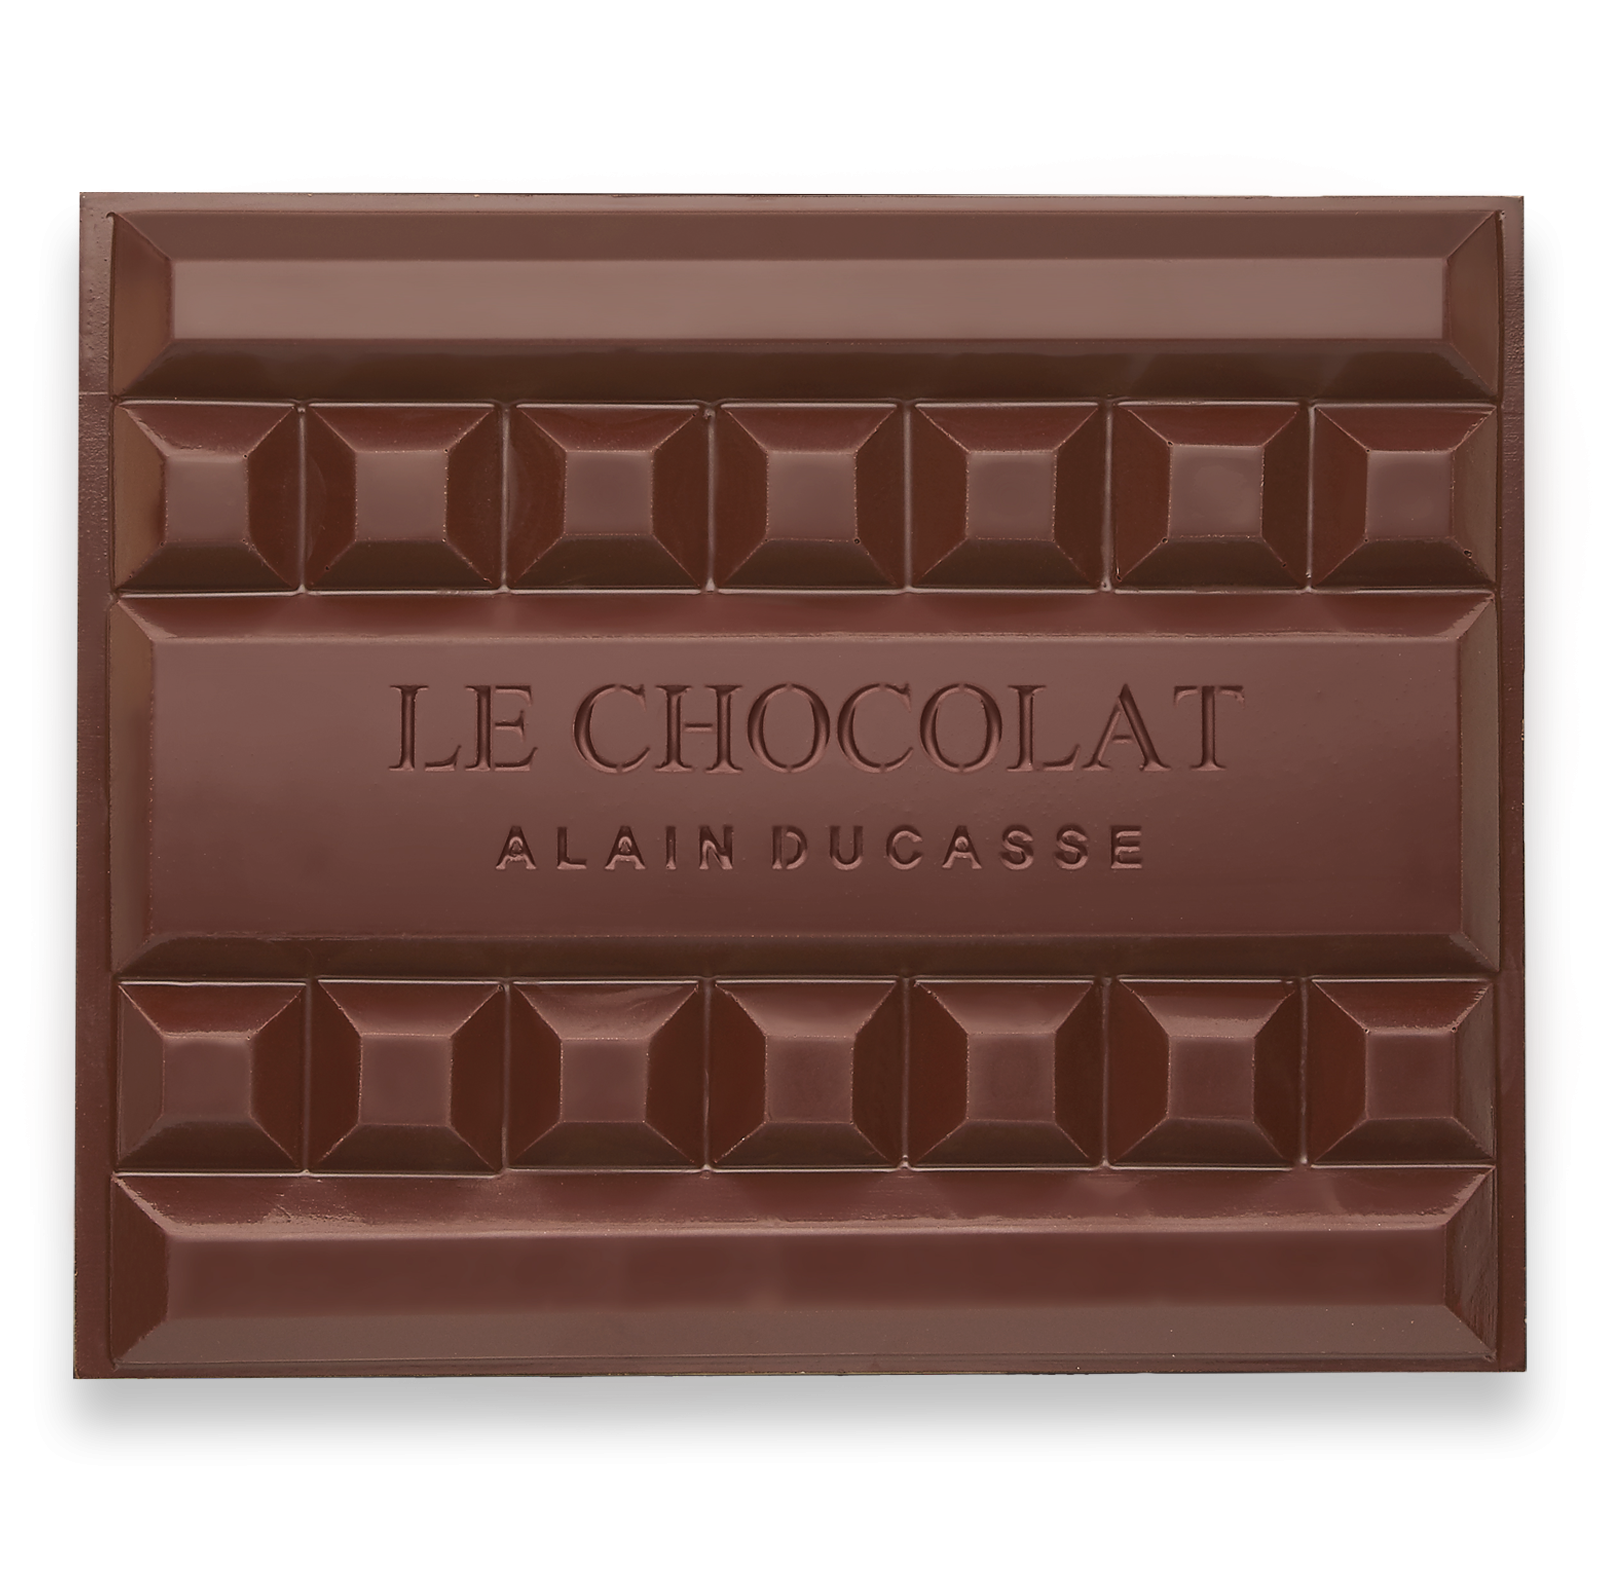 Giant Chocolate bar